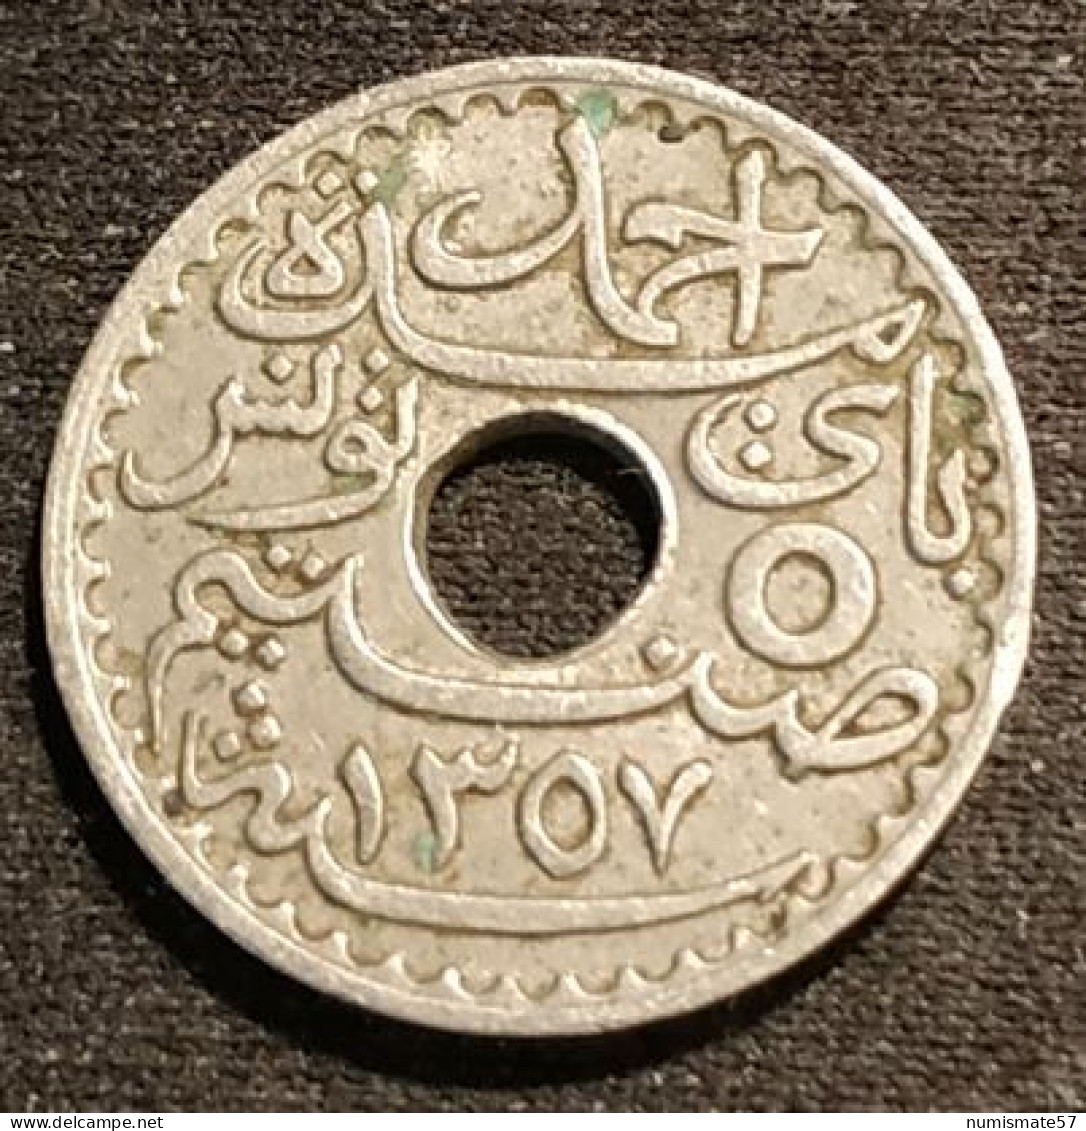 TUNISIE - TUNISIA - 5 CENTIMES 1938 ( 1357 ) - Ahmad Pasha - Protectorat Français - KM 258 - Túnez